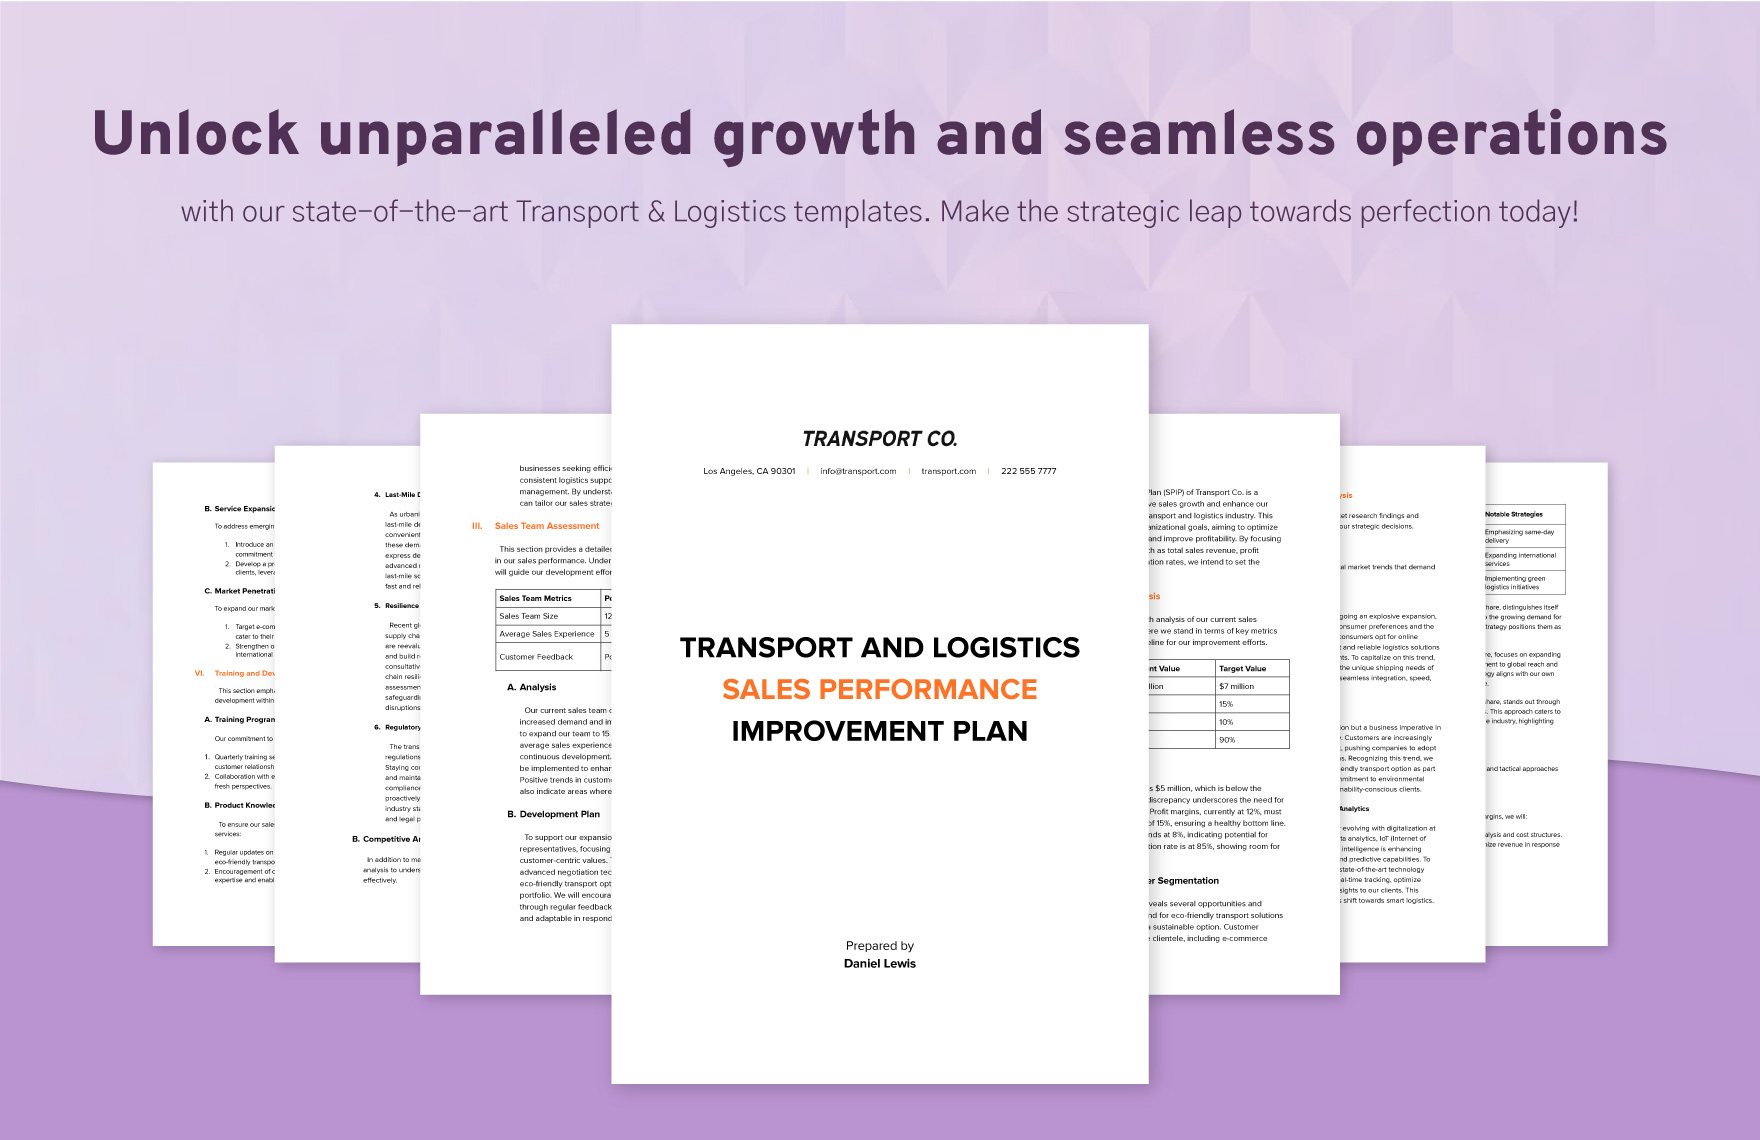 Transport and Logistics Sales Performance Improvement Plan Template